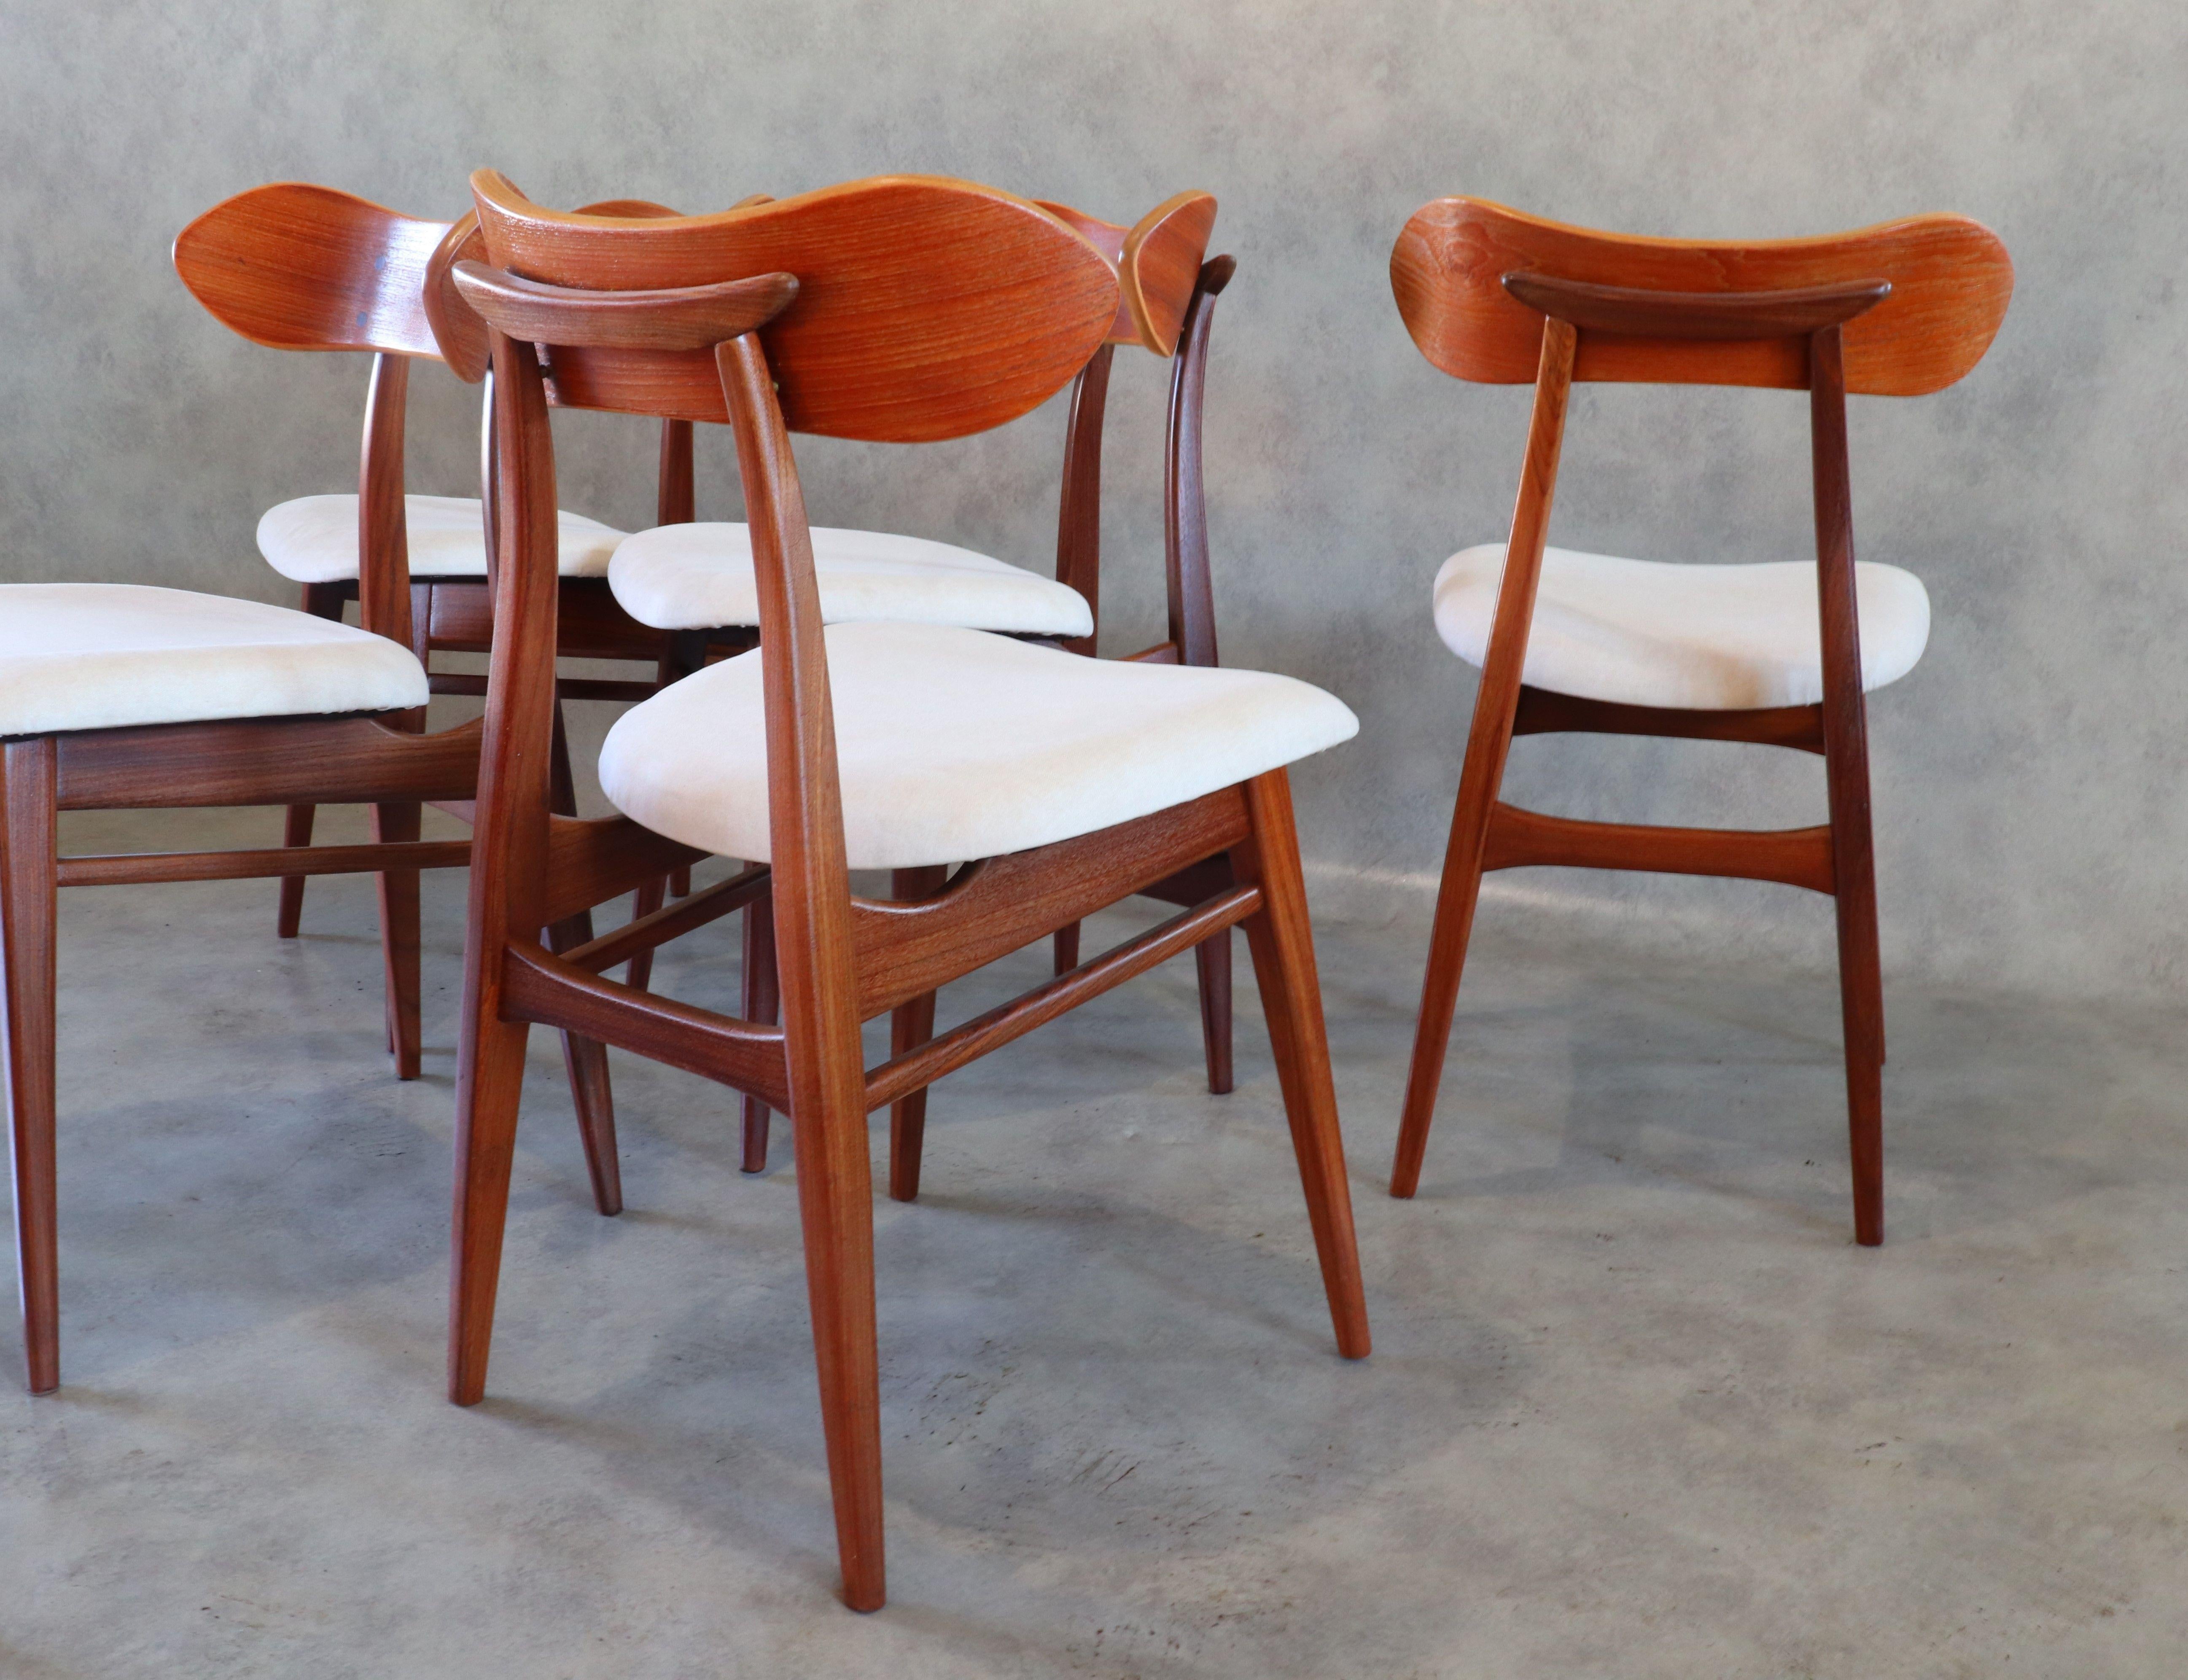 20th Century Reupholstered Teak Dining Chairs by Louis Van Teeffelen for Webe 1